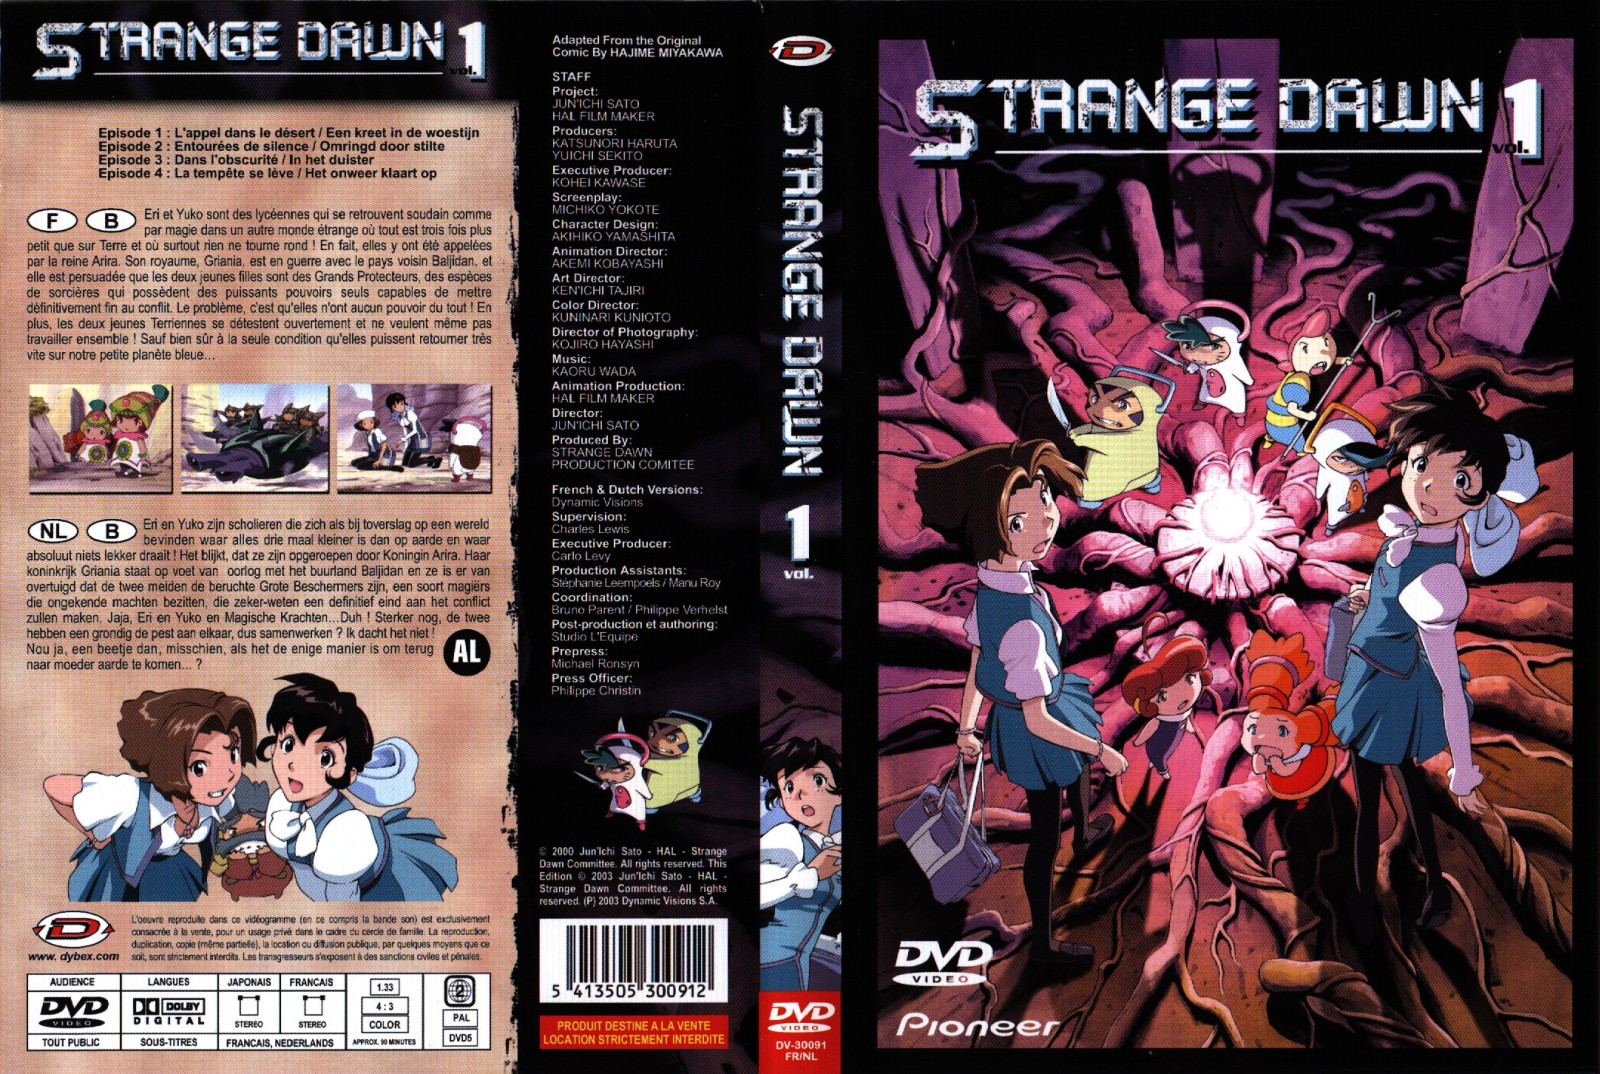 Jaquette DVD Strange dawn vol 1